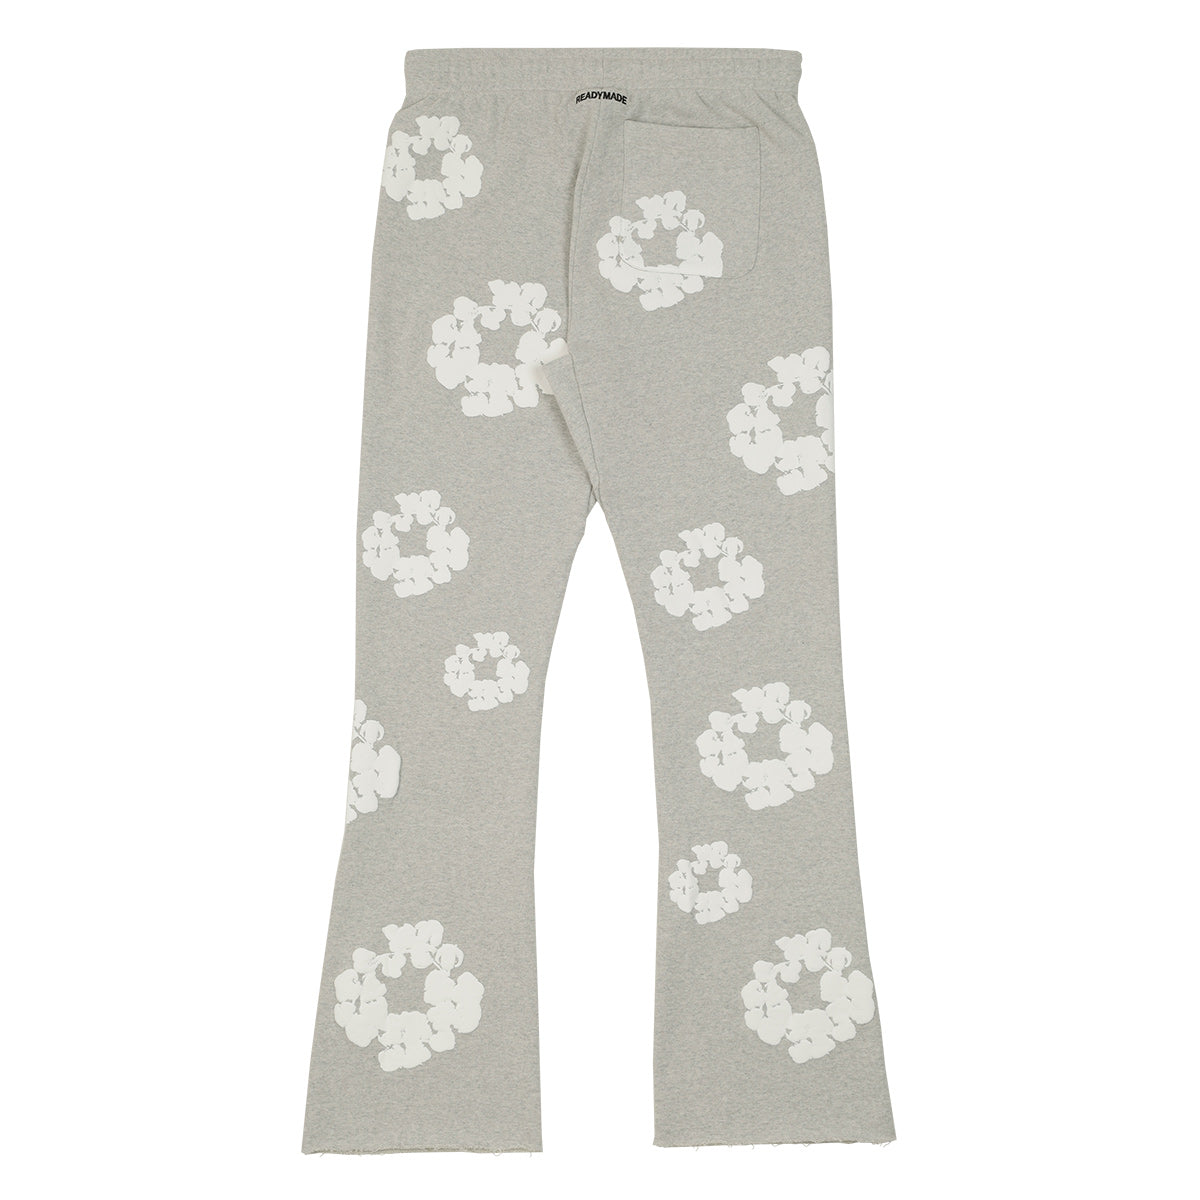 READYMADE - COTTON WREATH SWEAT PANTS GRAY/WHITE Sweatpants